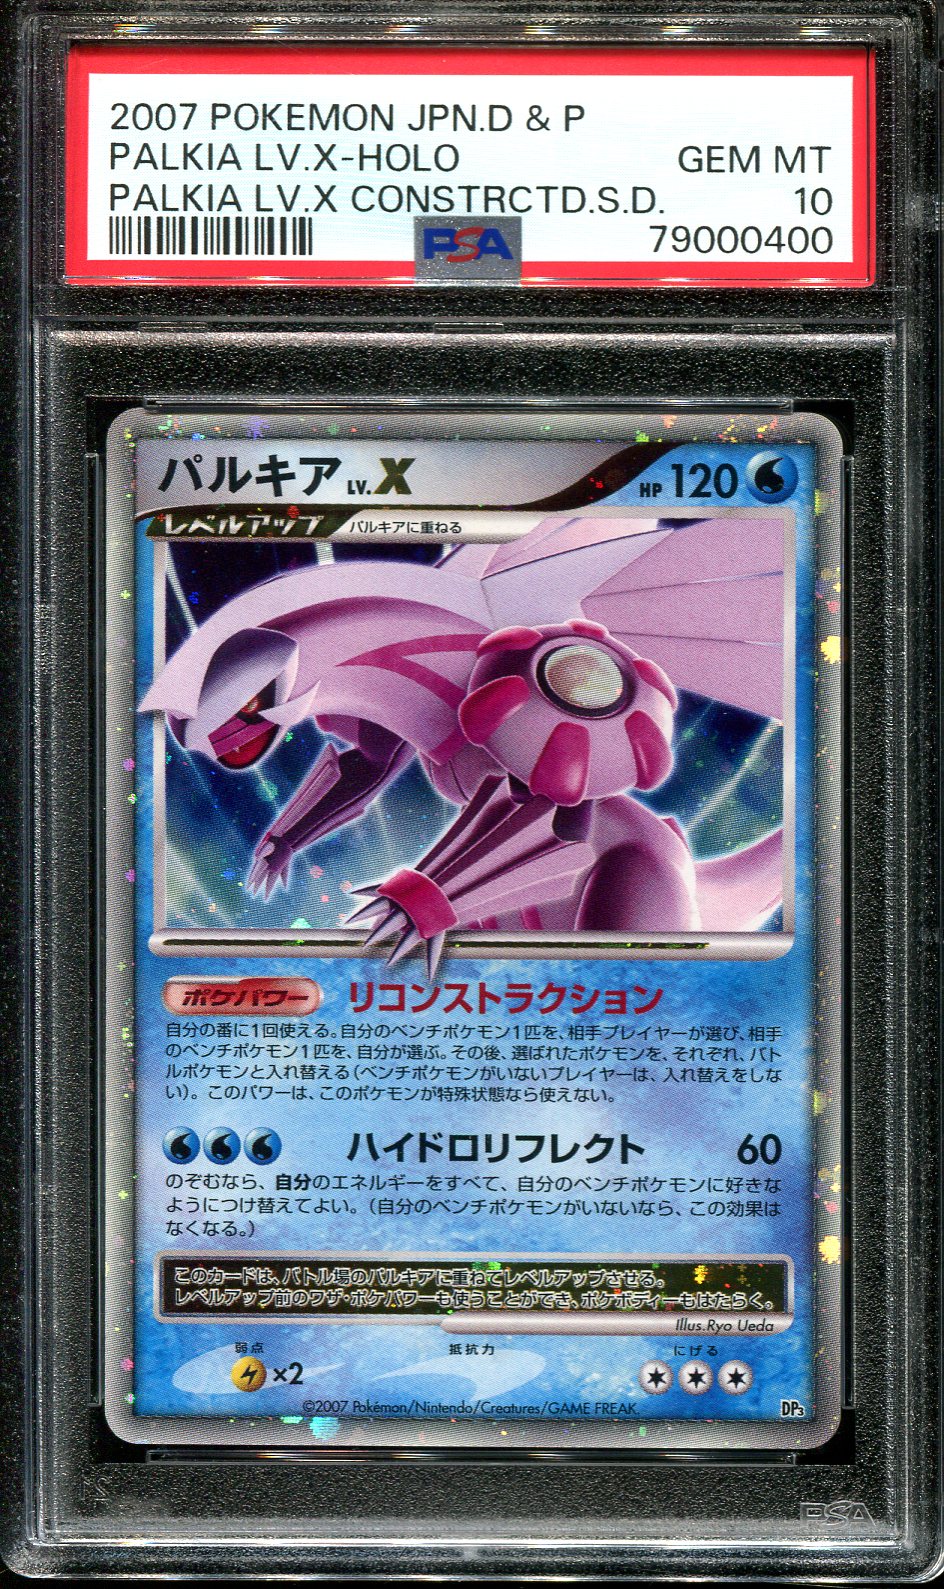 PSA 10] Pokemon Card Japanese Palkia LV.X DP3 Constrctd.S.D. from